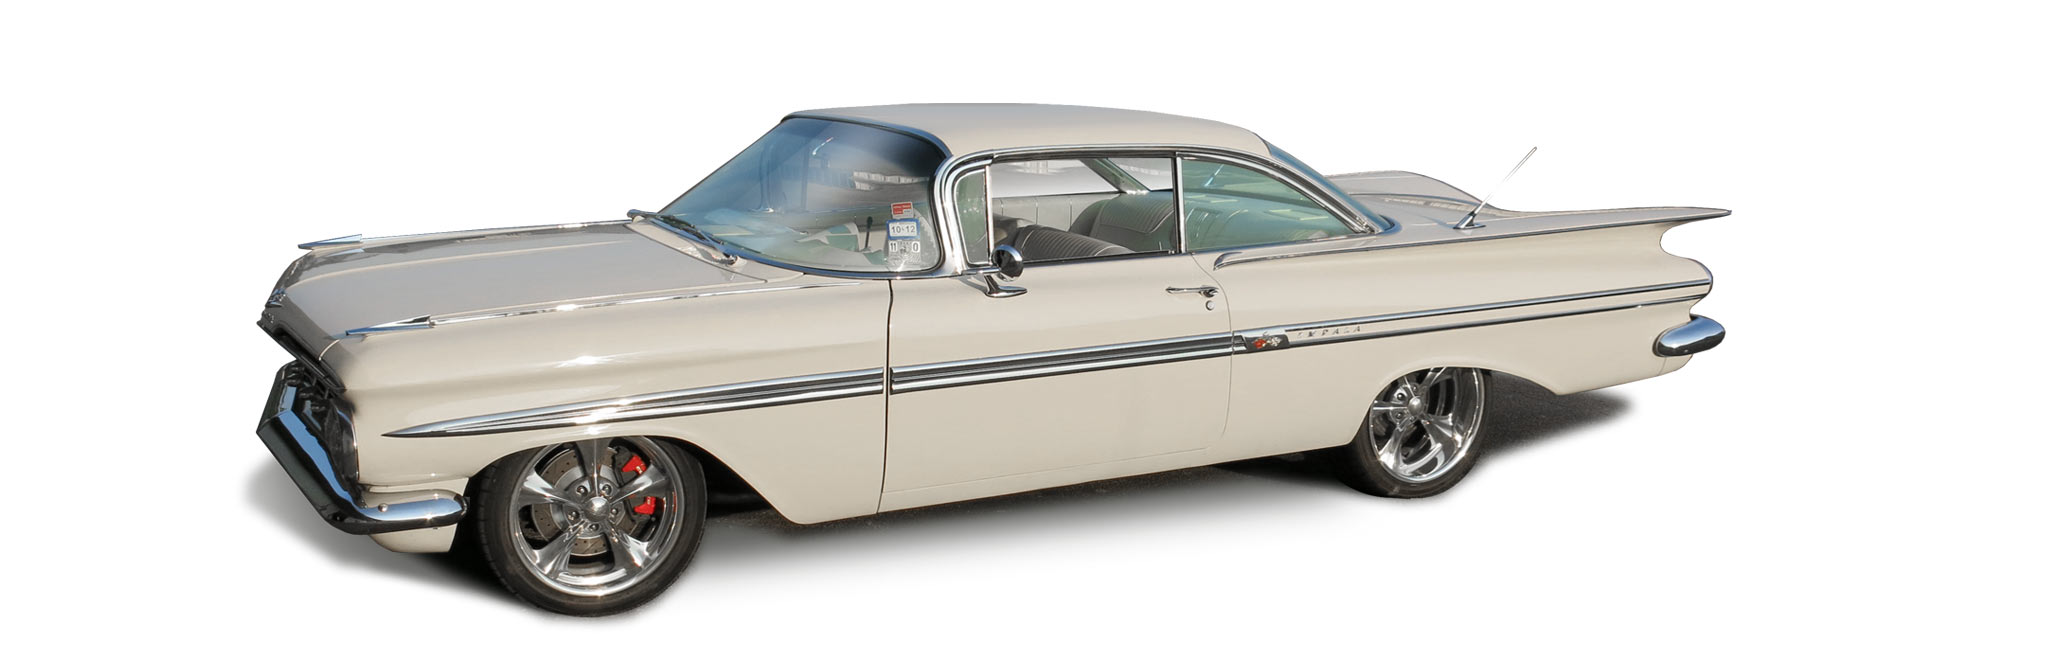 RELIC 1959 Impala internal page